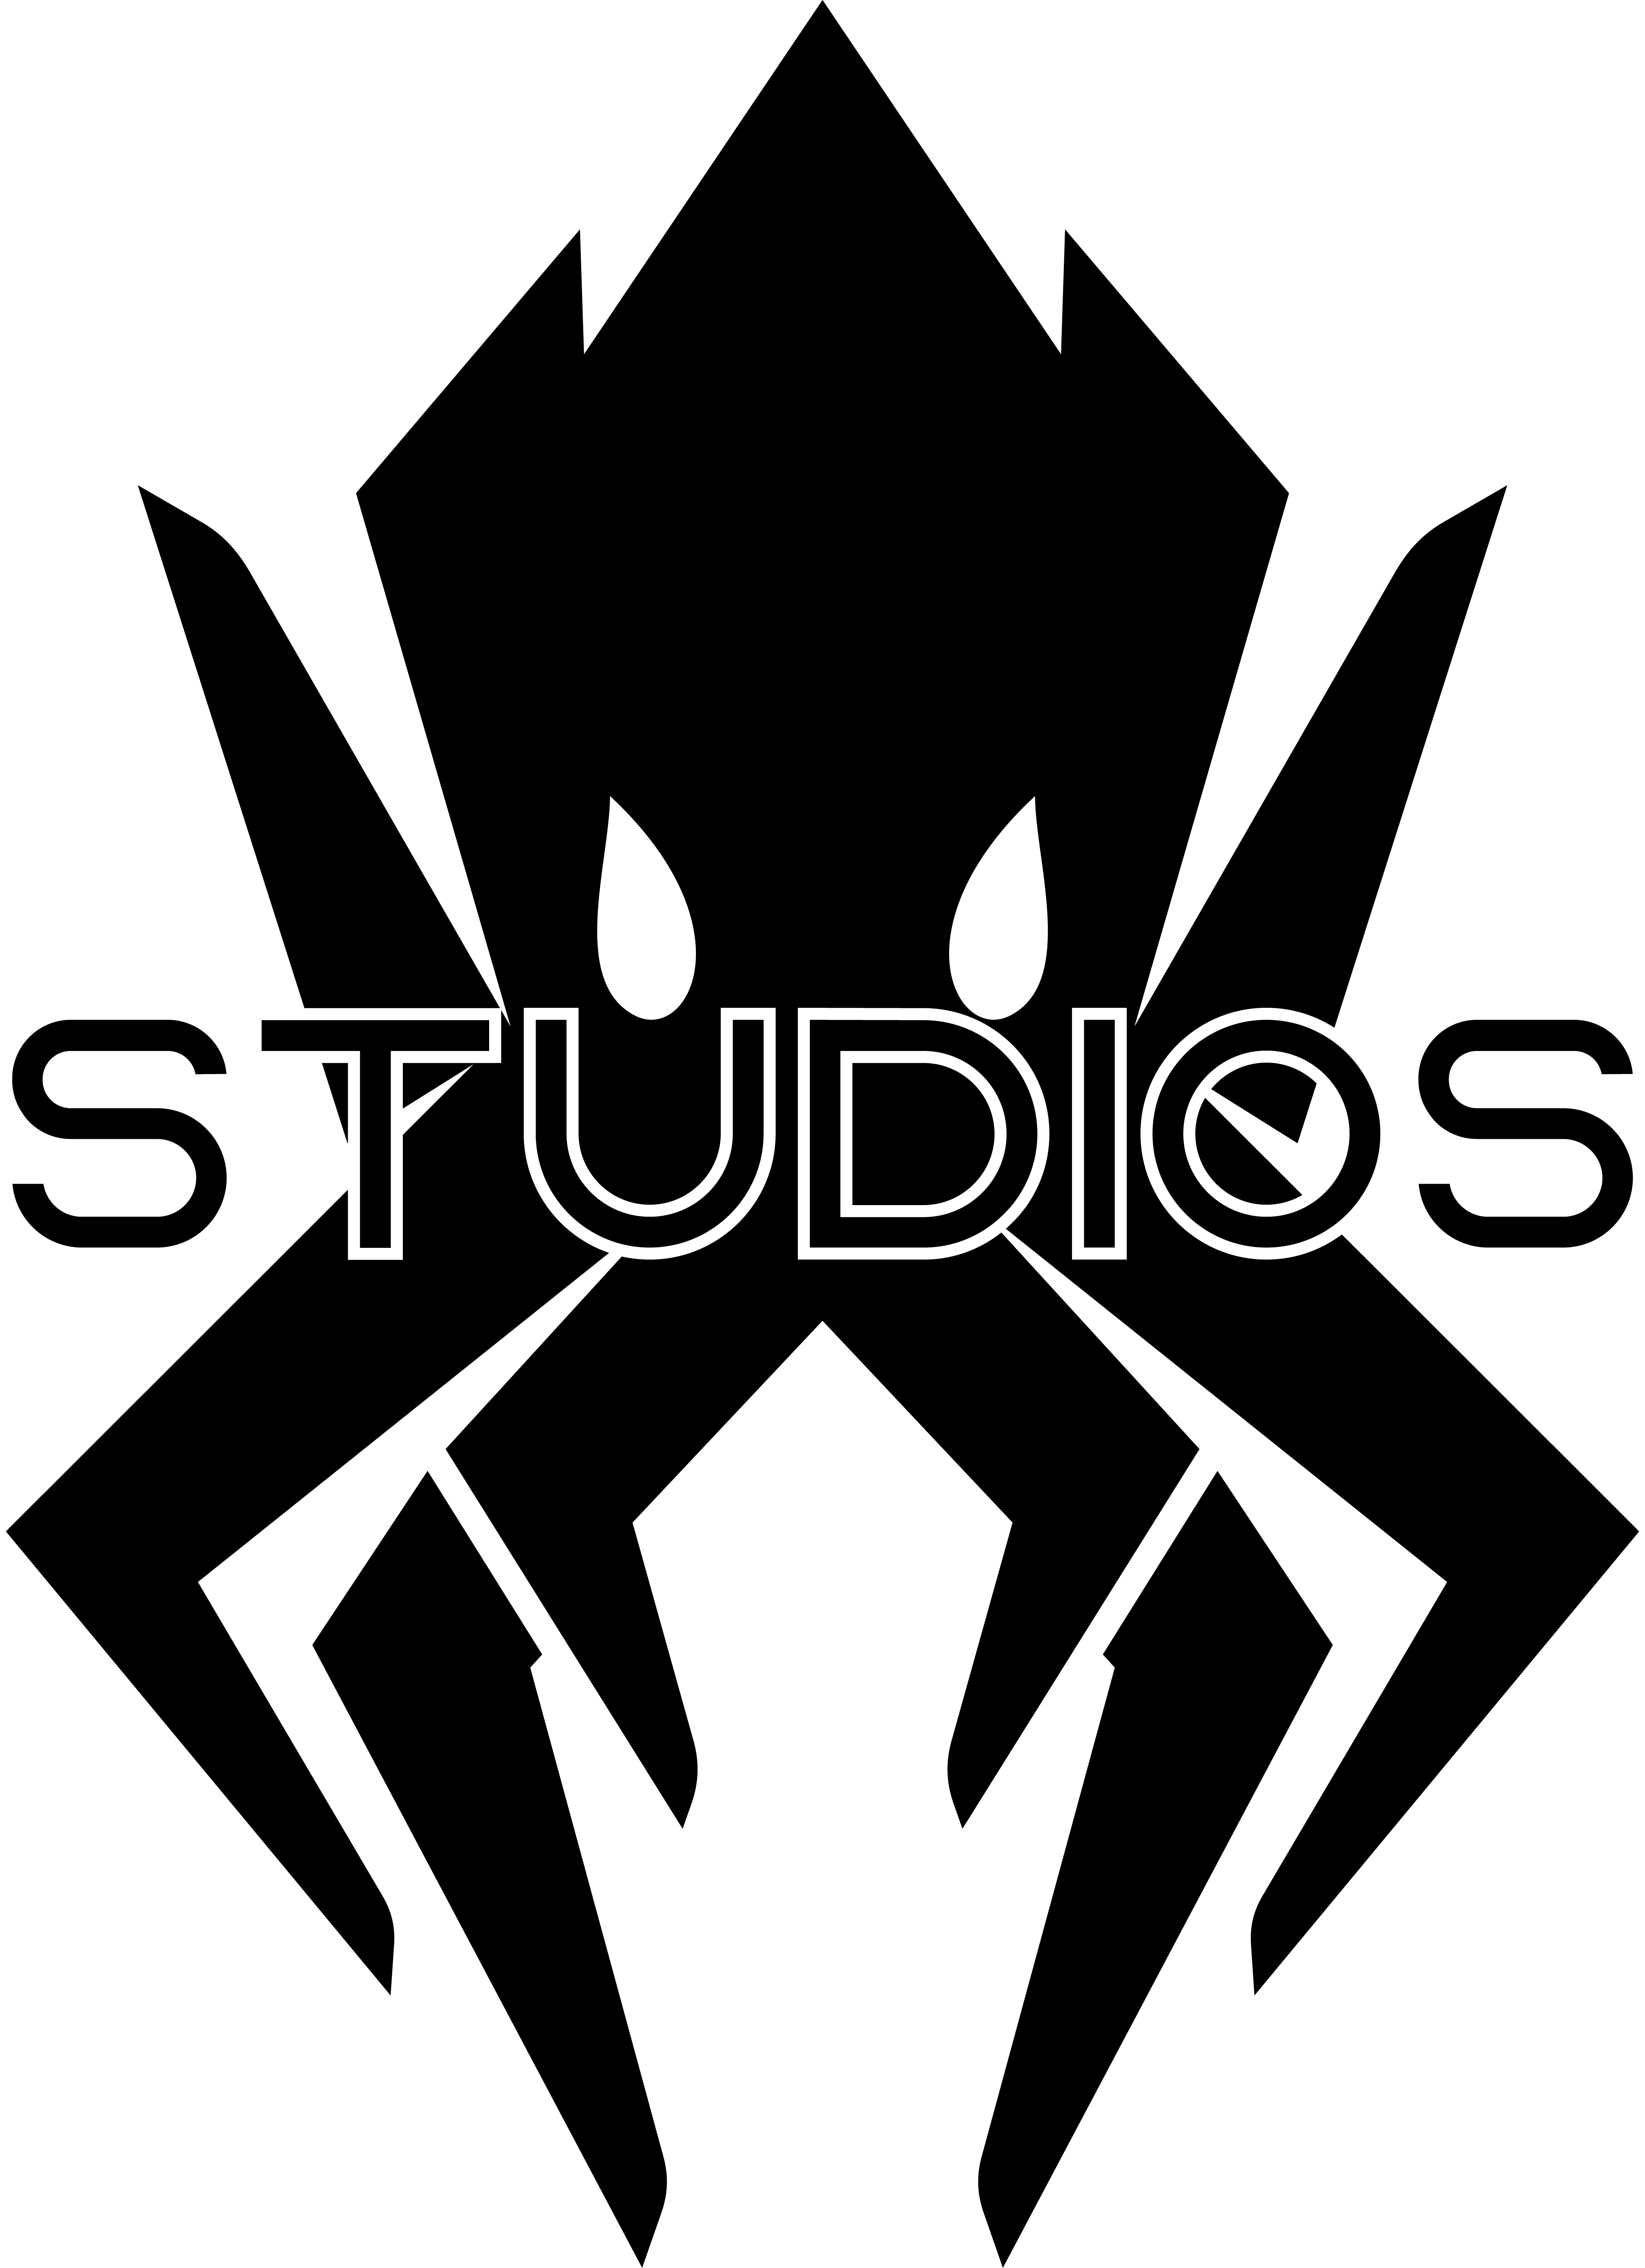 StudiosLogo.png